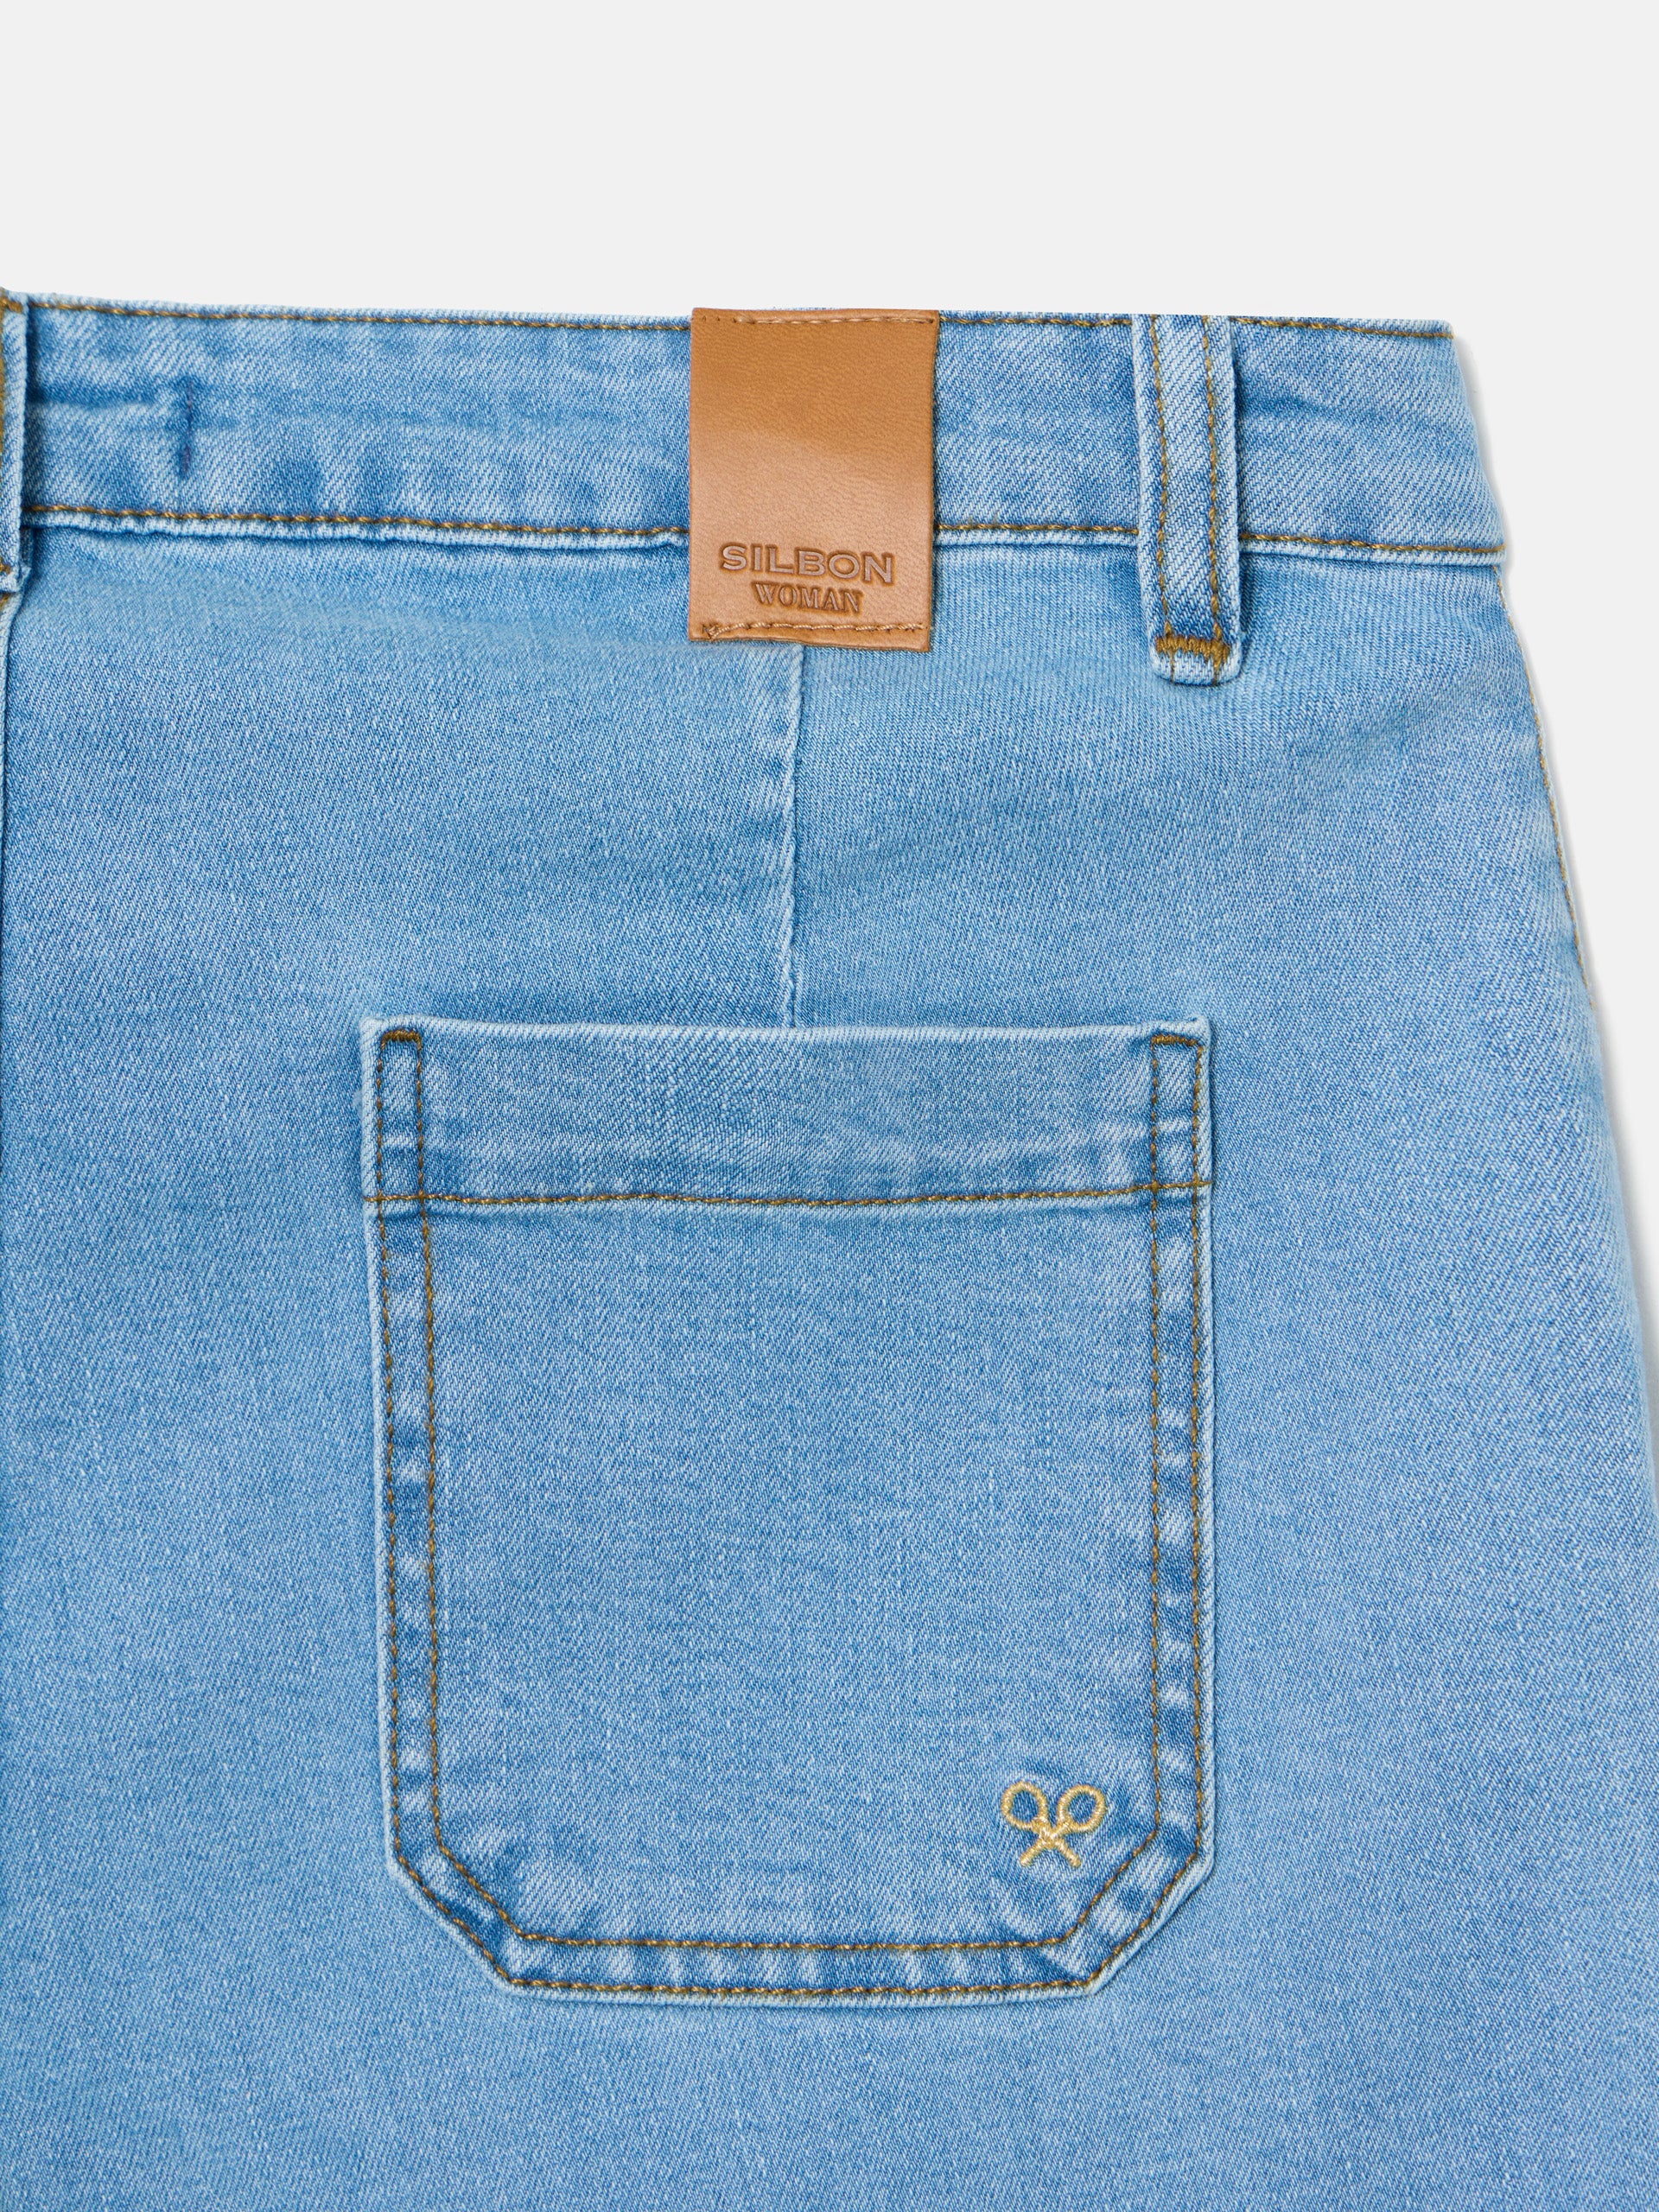 Navy blue pocket culotte pants